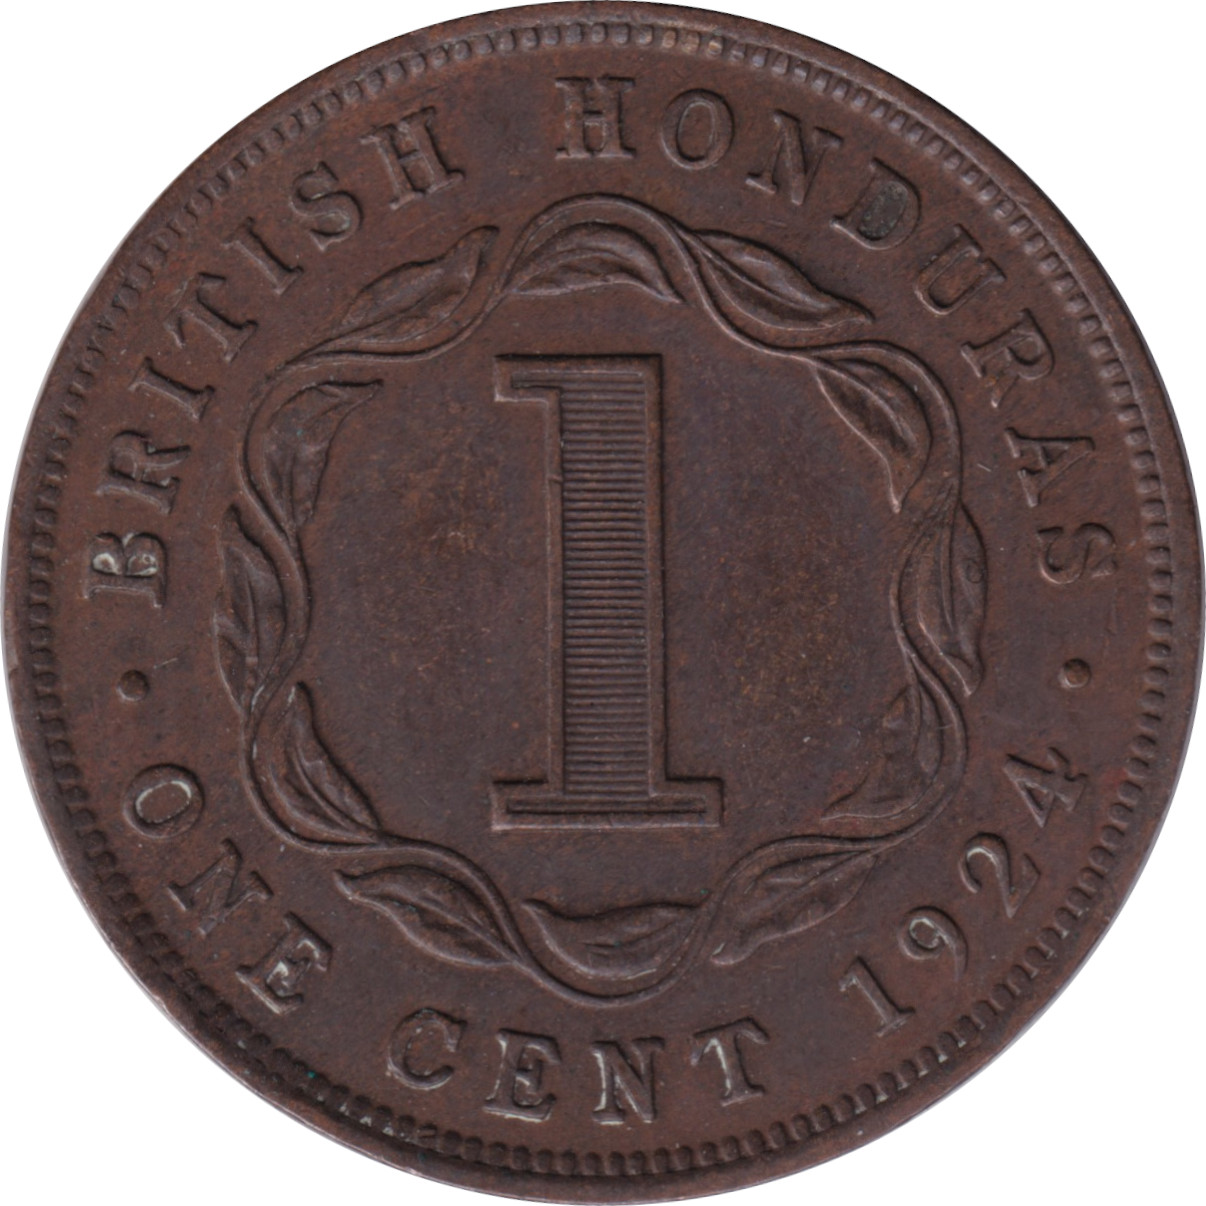 1 cent - Georges V - Rameaux centraux